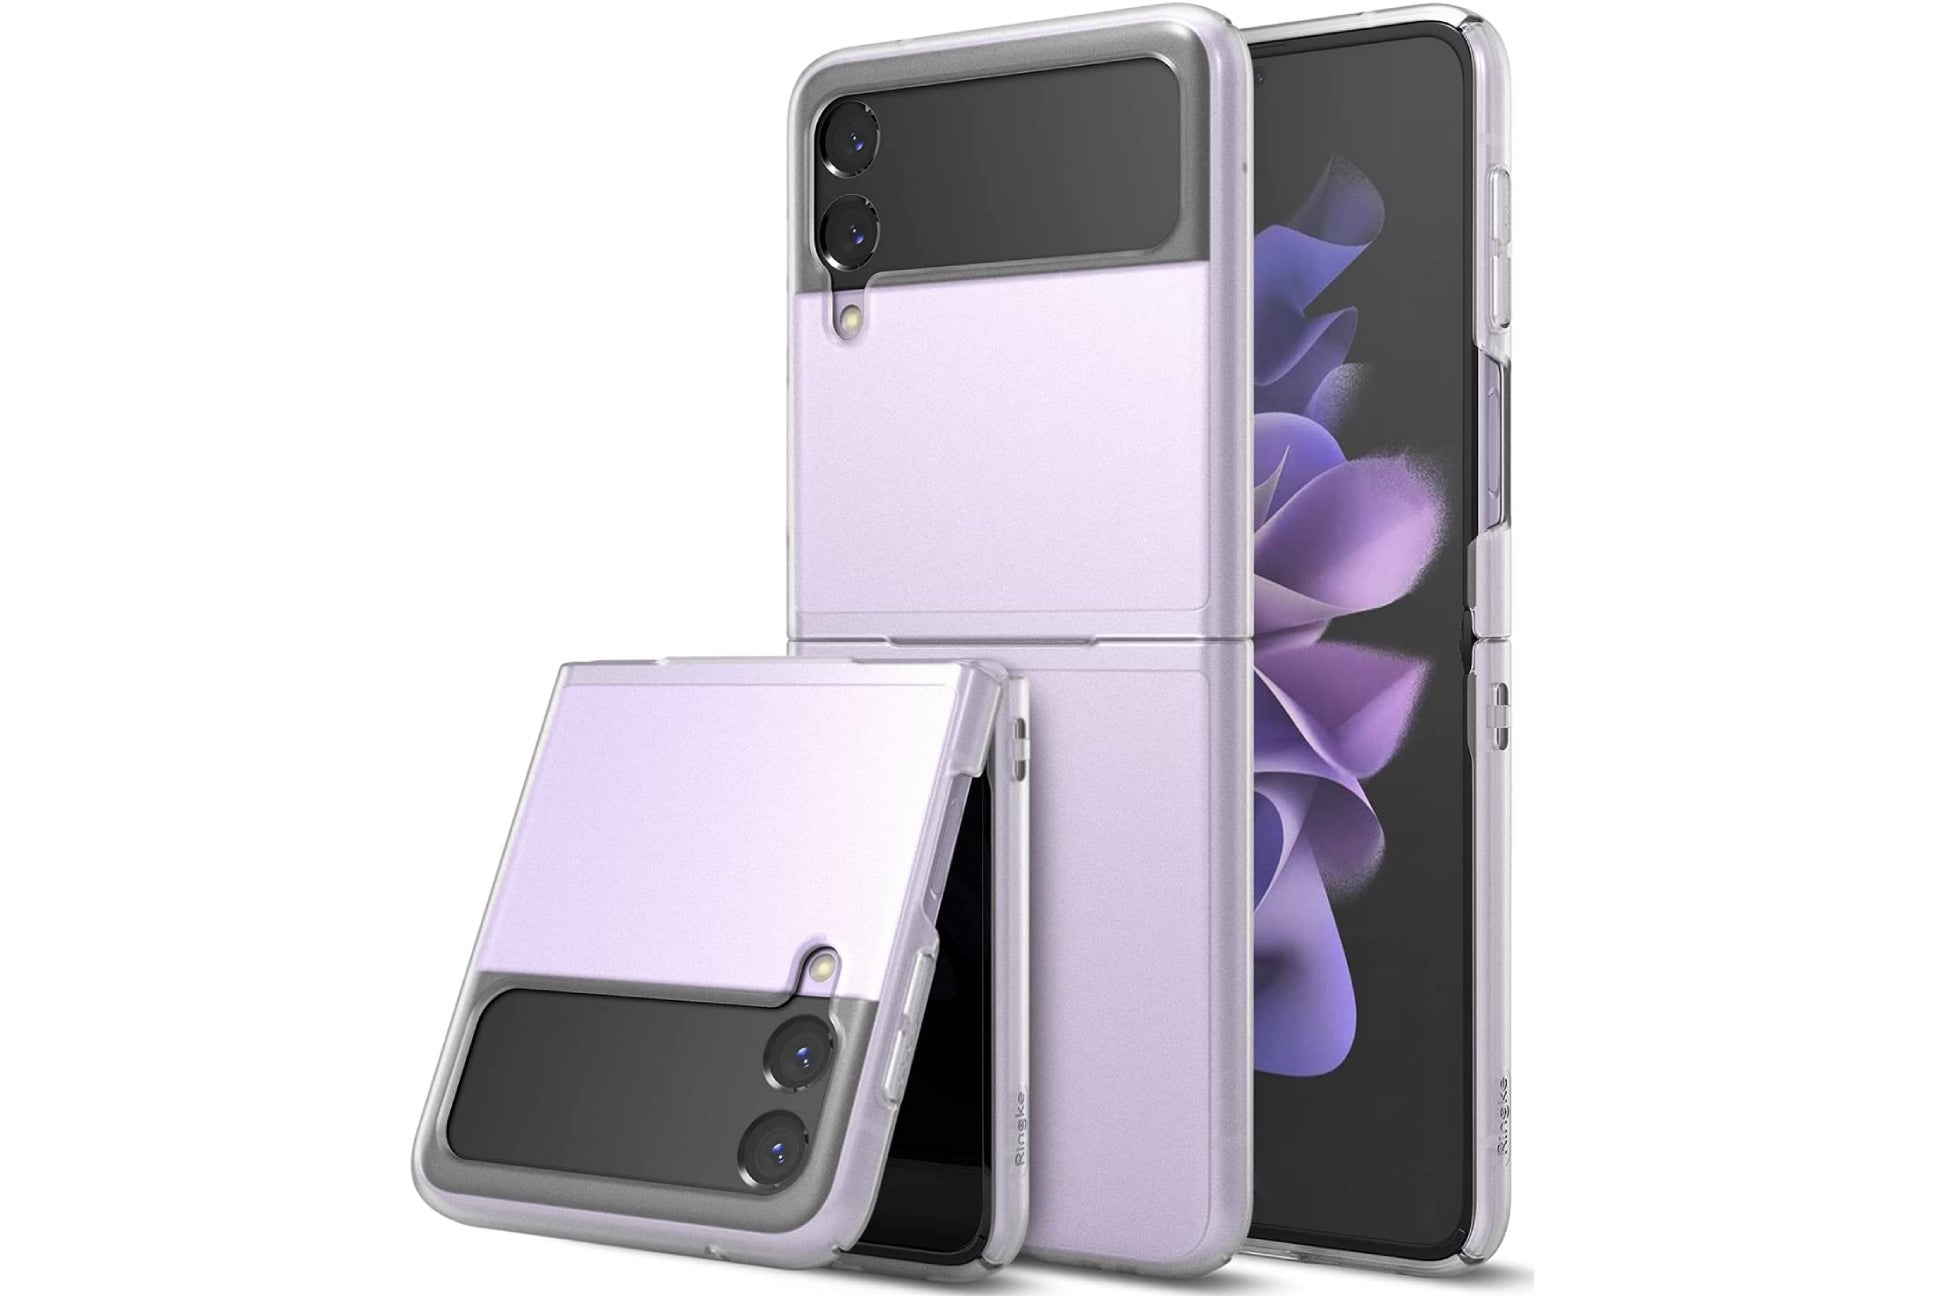 Ringke Slim clear case for Galaxy Z Flip 3 - Best Samsung Galaxy Z Flip 3 cases